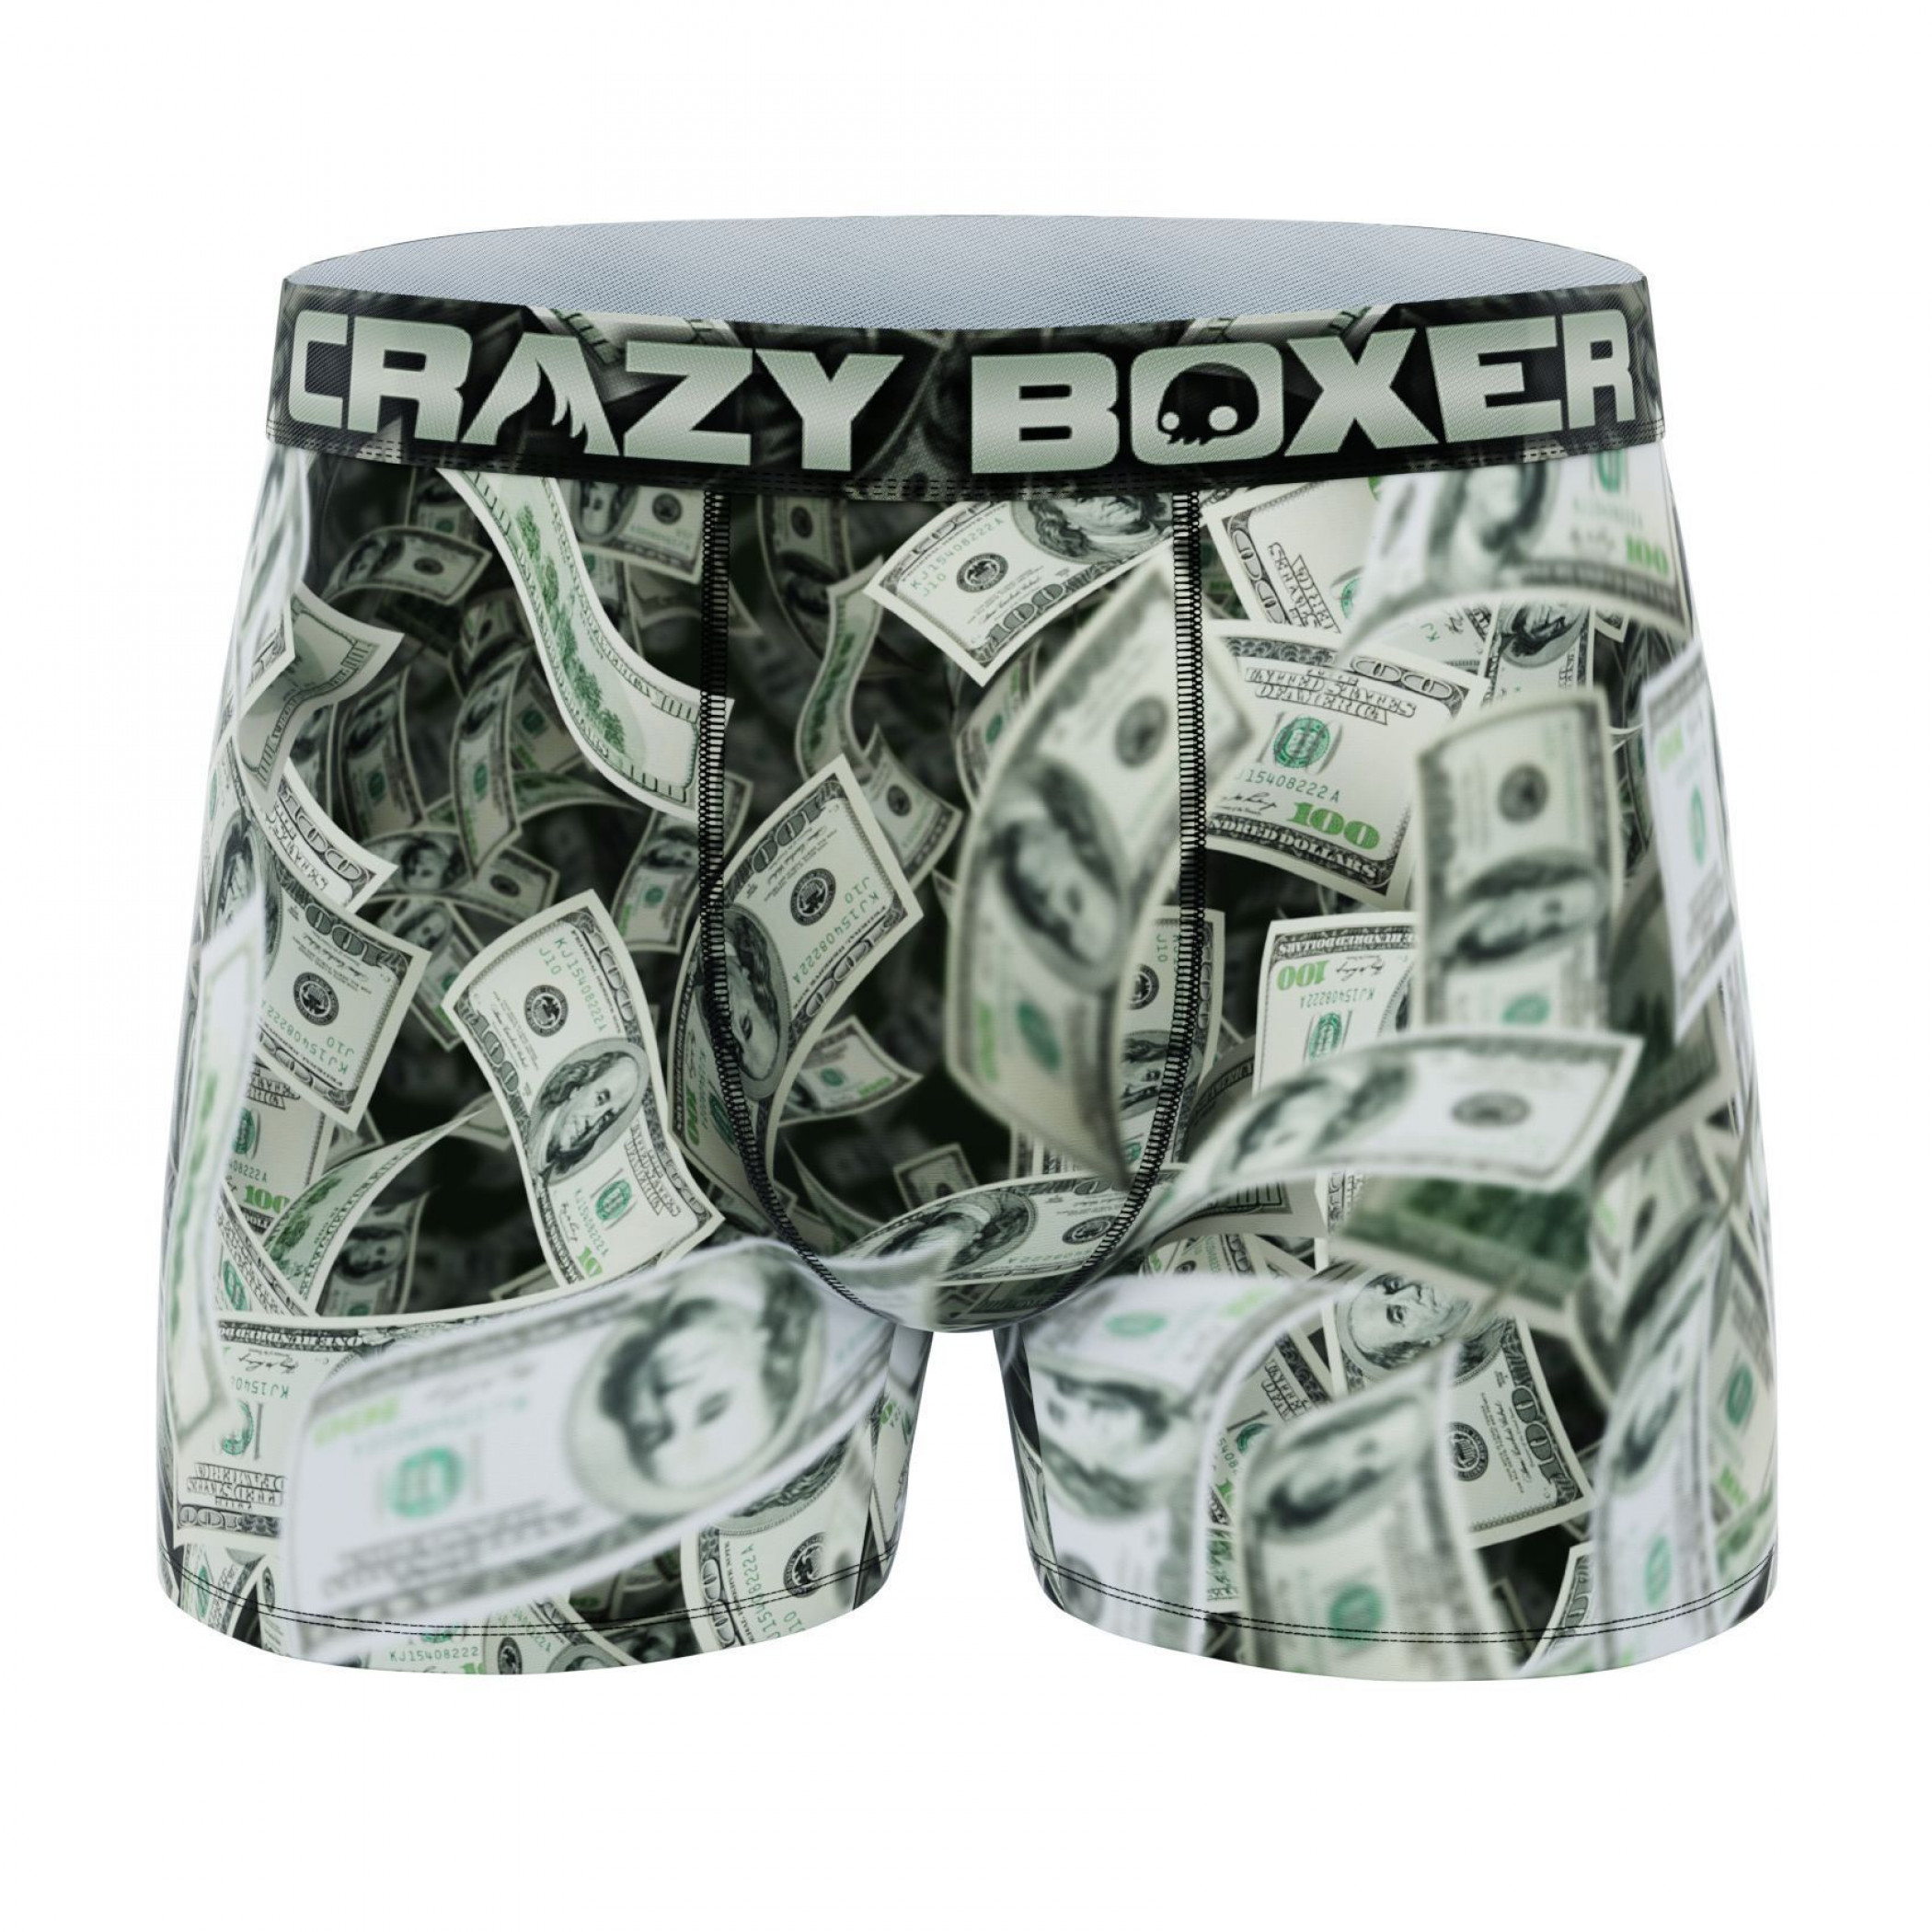 Crazy Boxer Underwear Mens Medium 32-34 Flaming 100 Dollar Bill